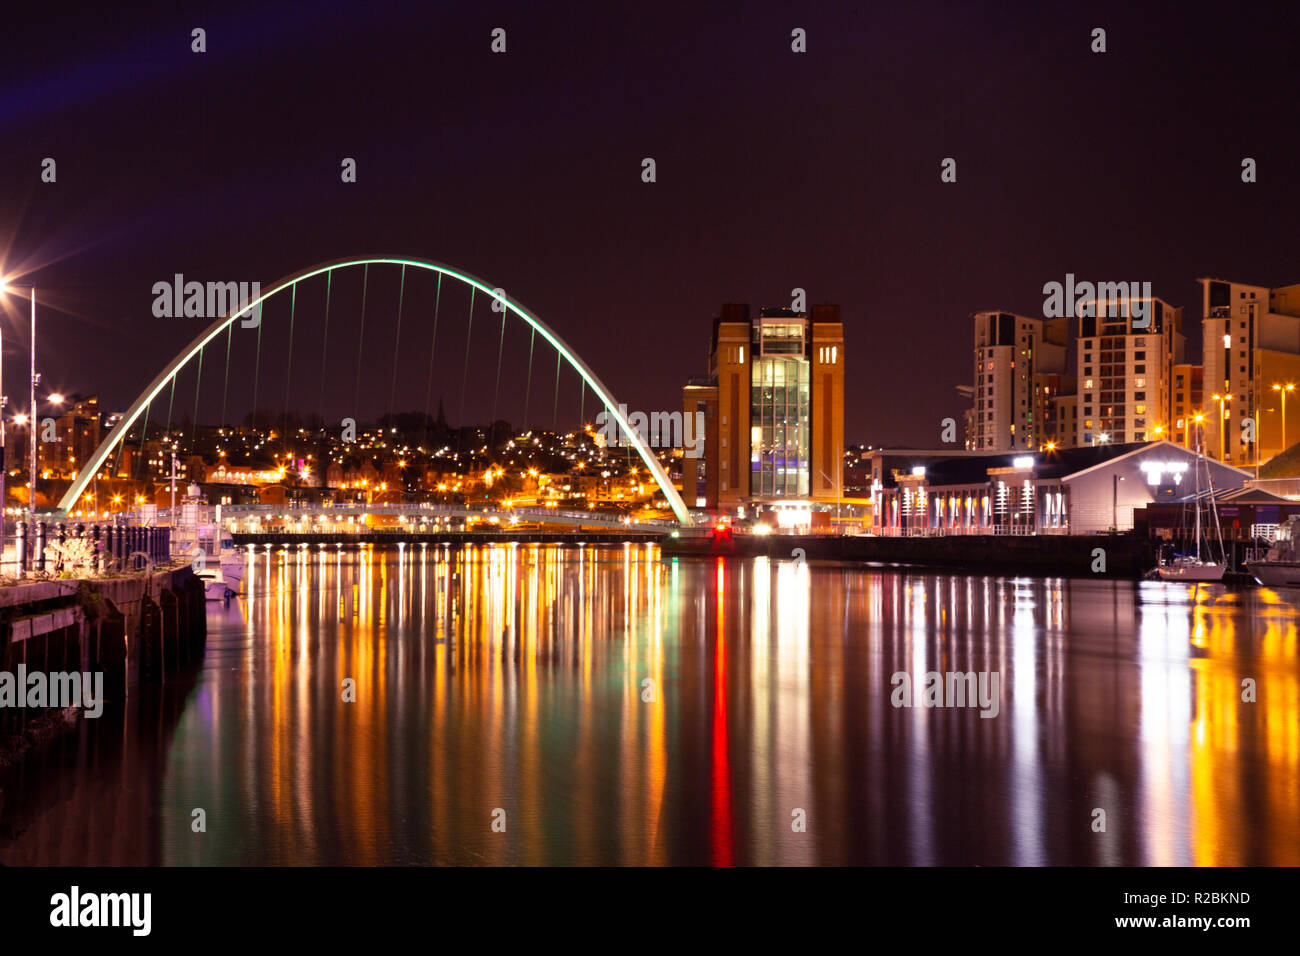 Newcastle upon Tyne/Inglaterra - 9 Abril 2014: puente Gateshead Millennium Bridge de noche Foto de stock